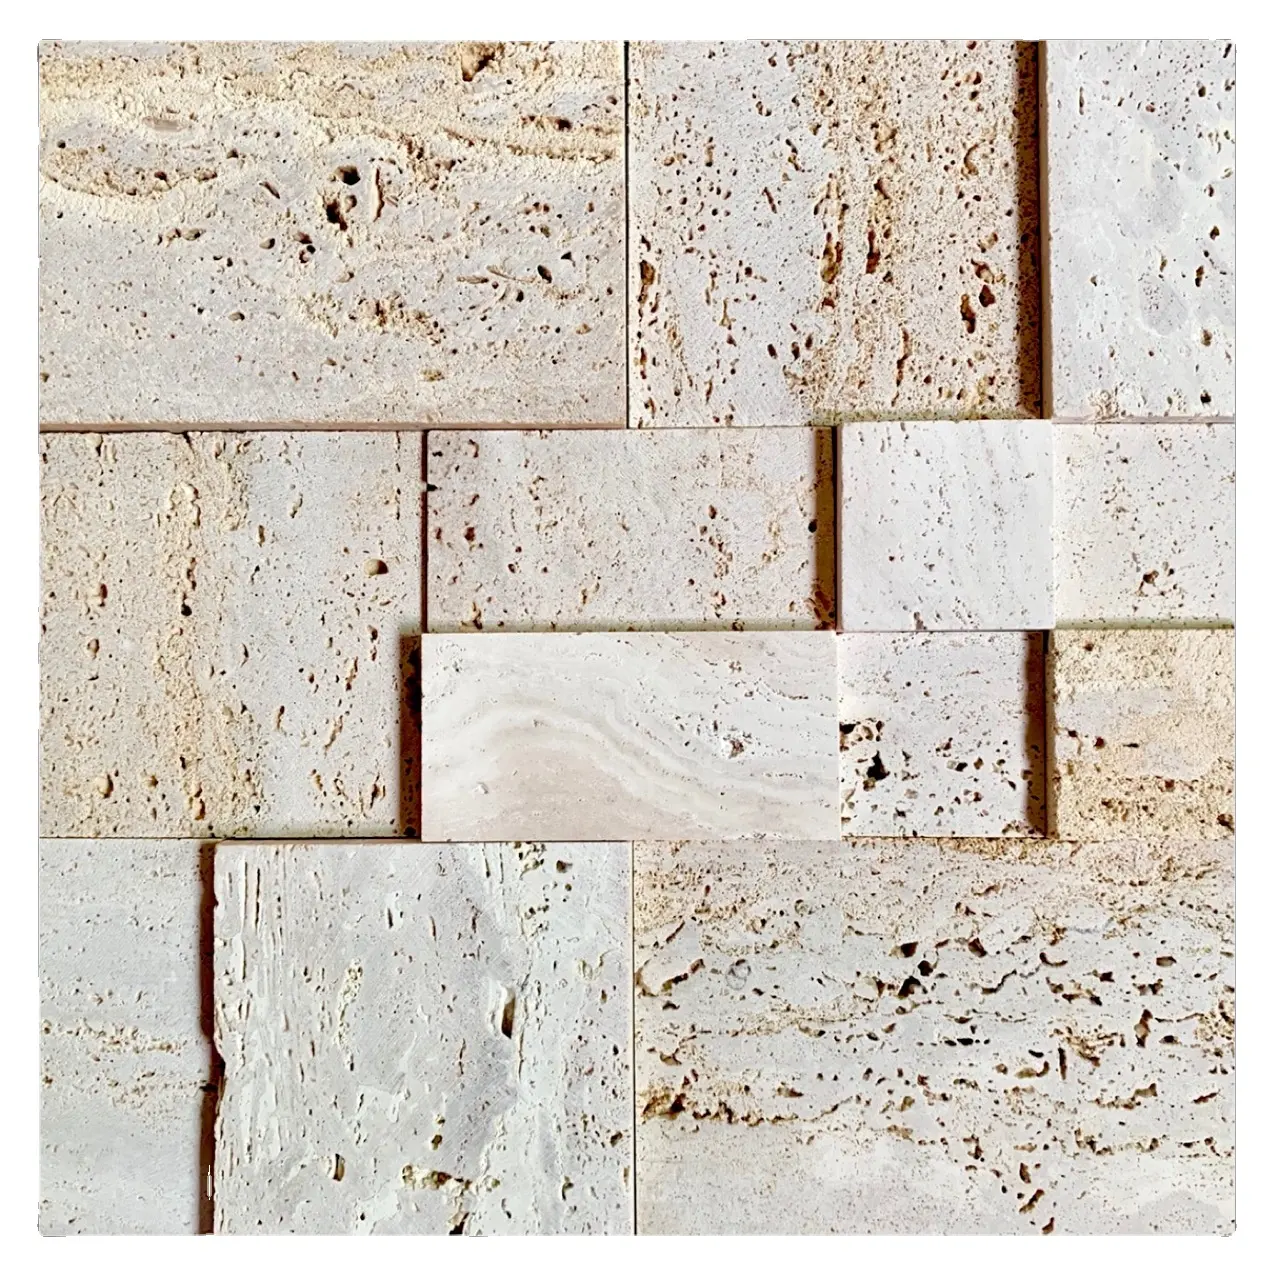 Beige travertine tile Paver French patten interlock Flooring Driveway travertine tiles beige matt Tile Construction Stone